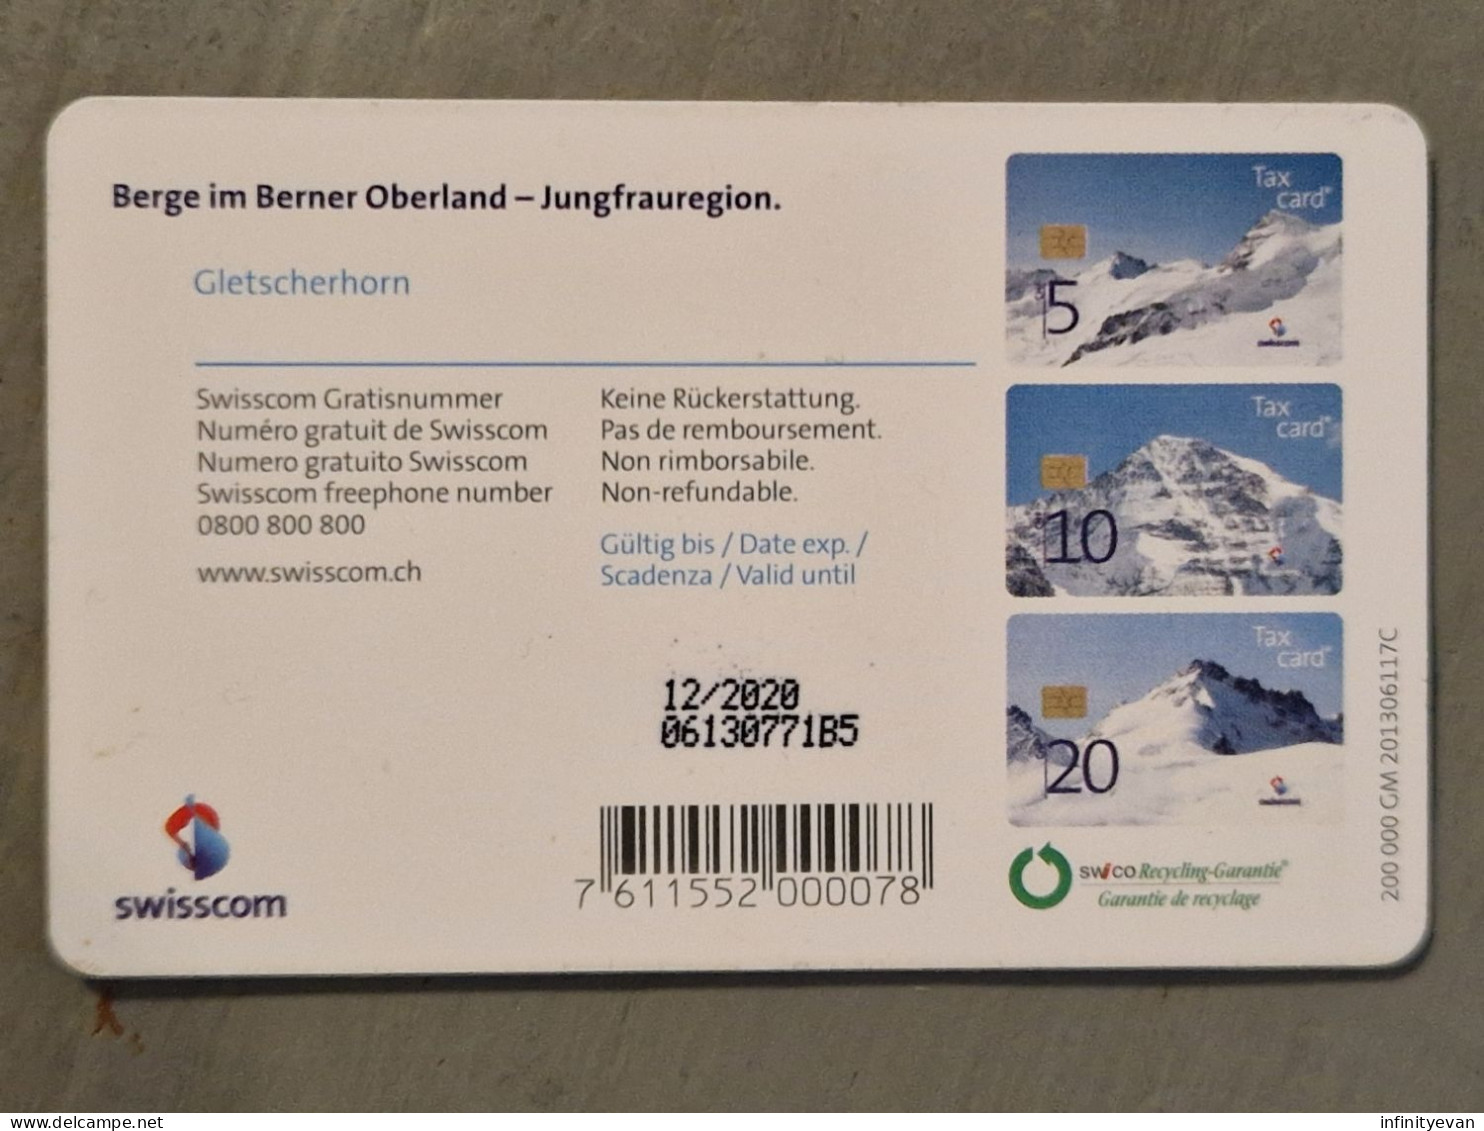 Tax Card 20 CHF MONTAGNE 12/2020 - Svizzera